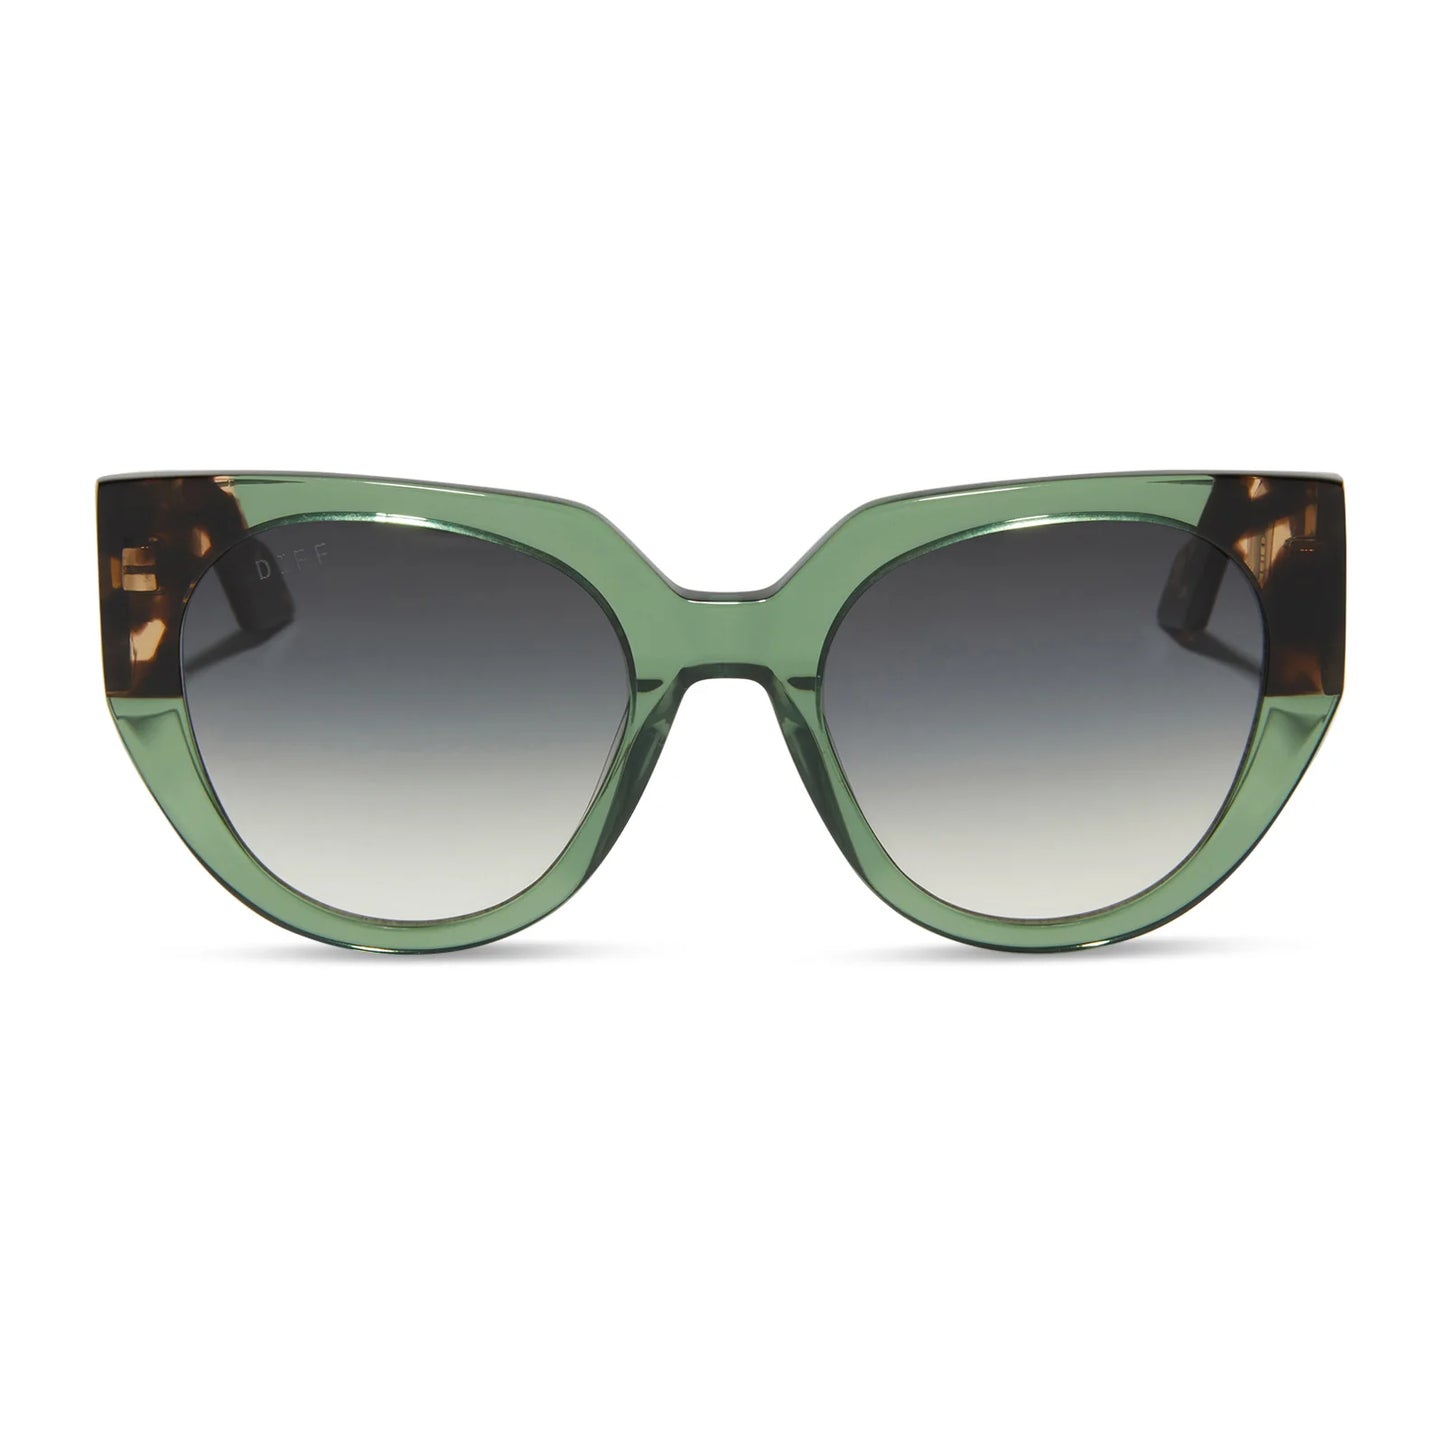 DIFF Eyewear - Ivy - Sage Crystal With Espresso Grey Gradient Polarized Sunglasses